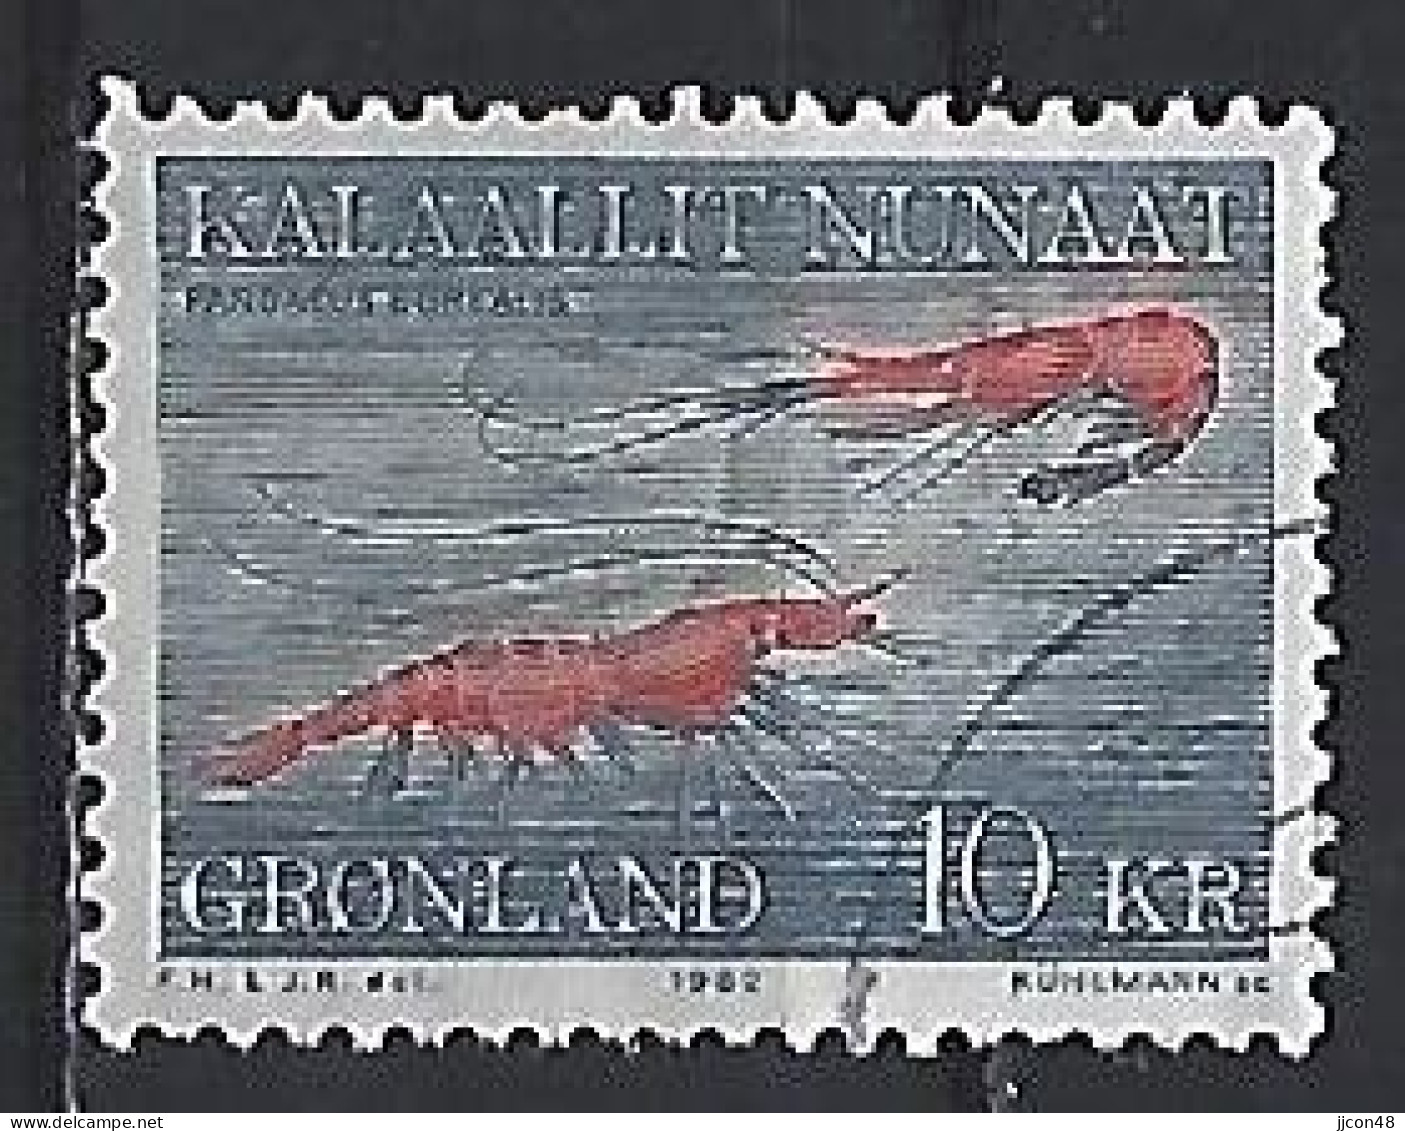 Greenland 1982  Sea Fauna (o) Mi.133 - Usati